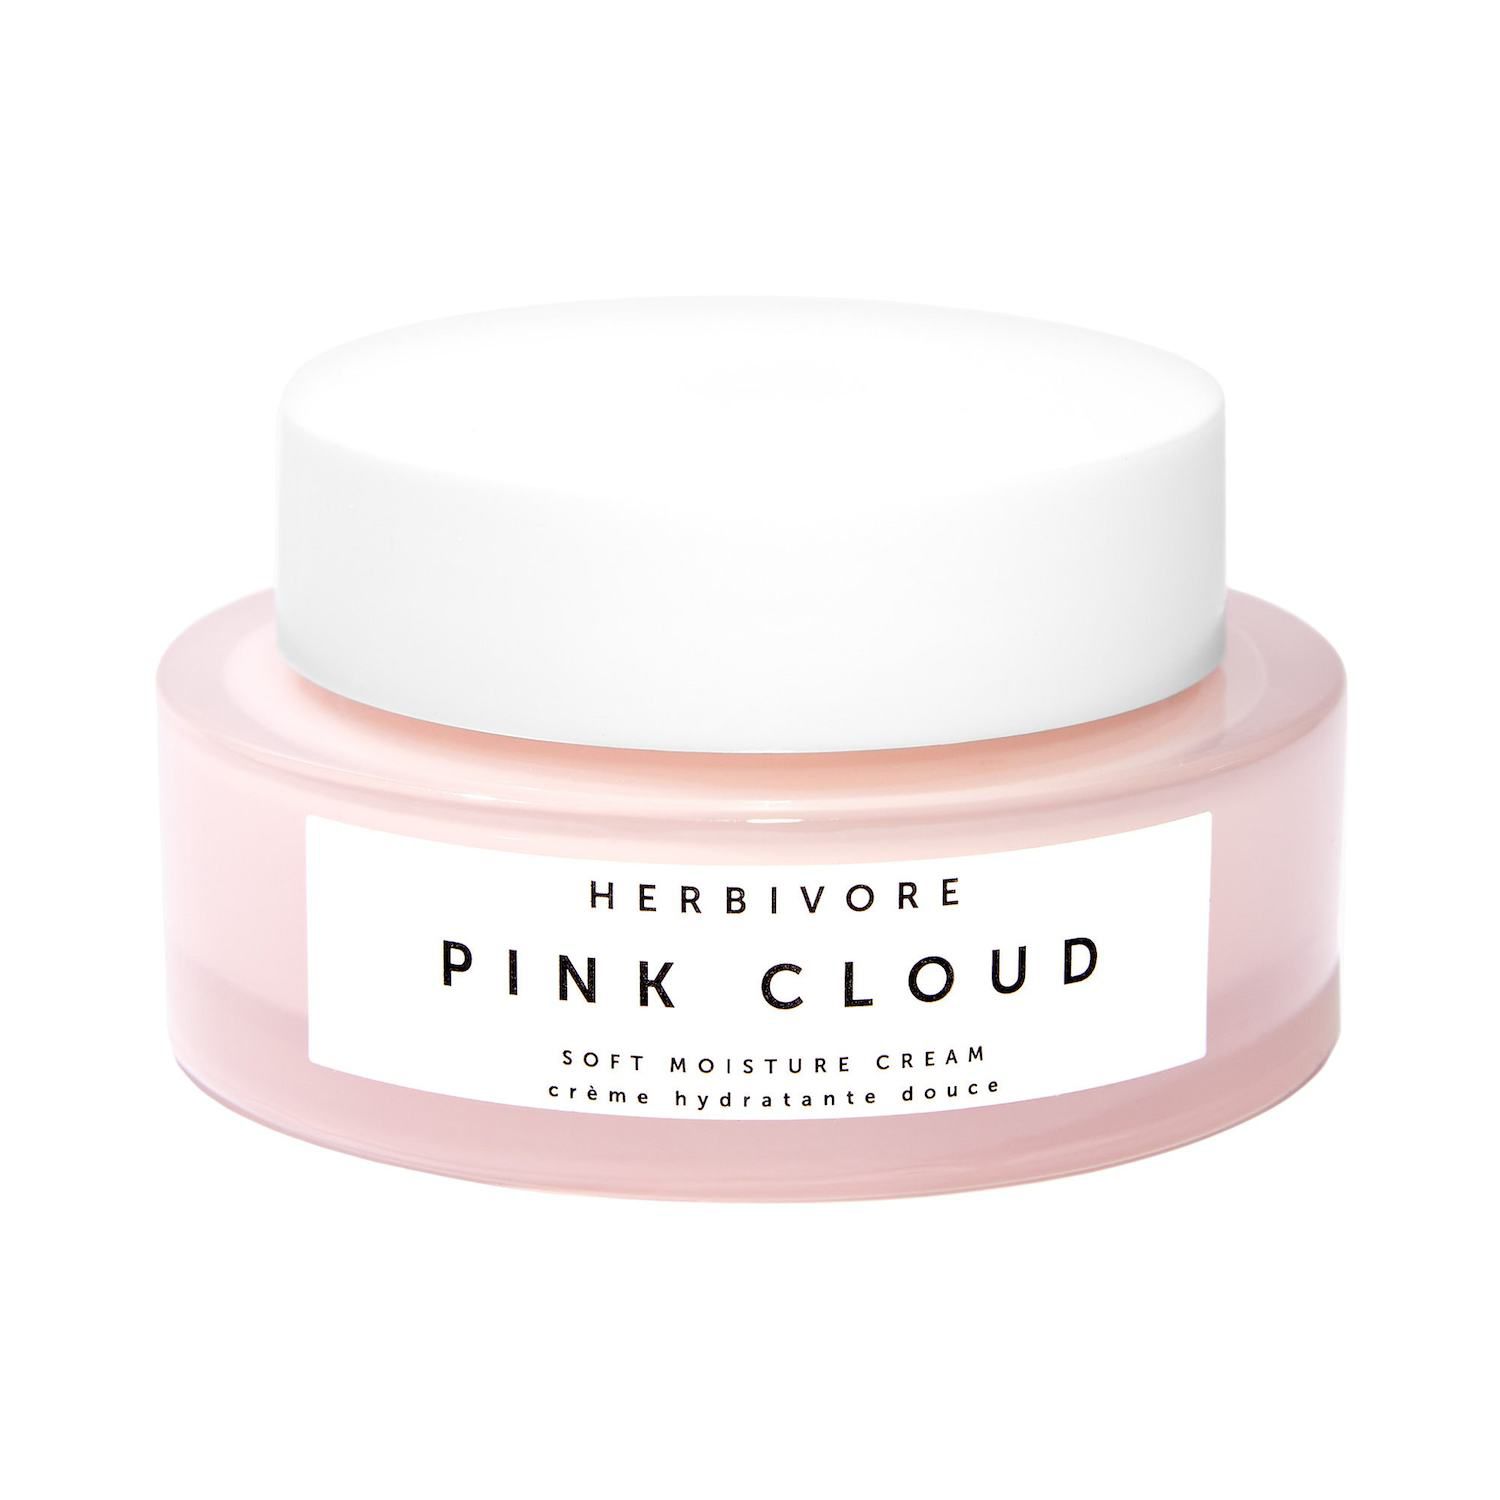 Image for Herbivore Botanicals Pink Cloud Soft Moisture Cream at Kohl's.